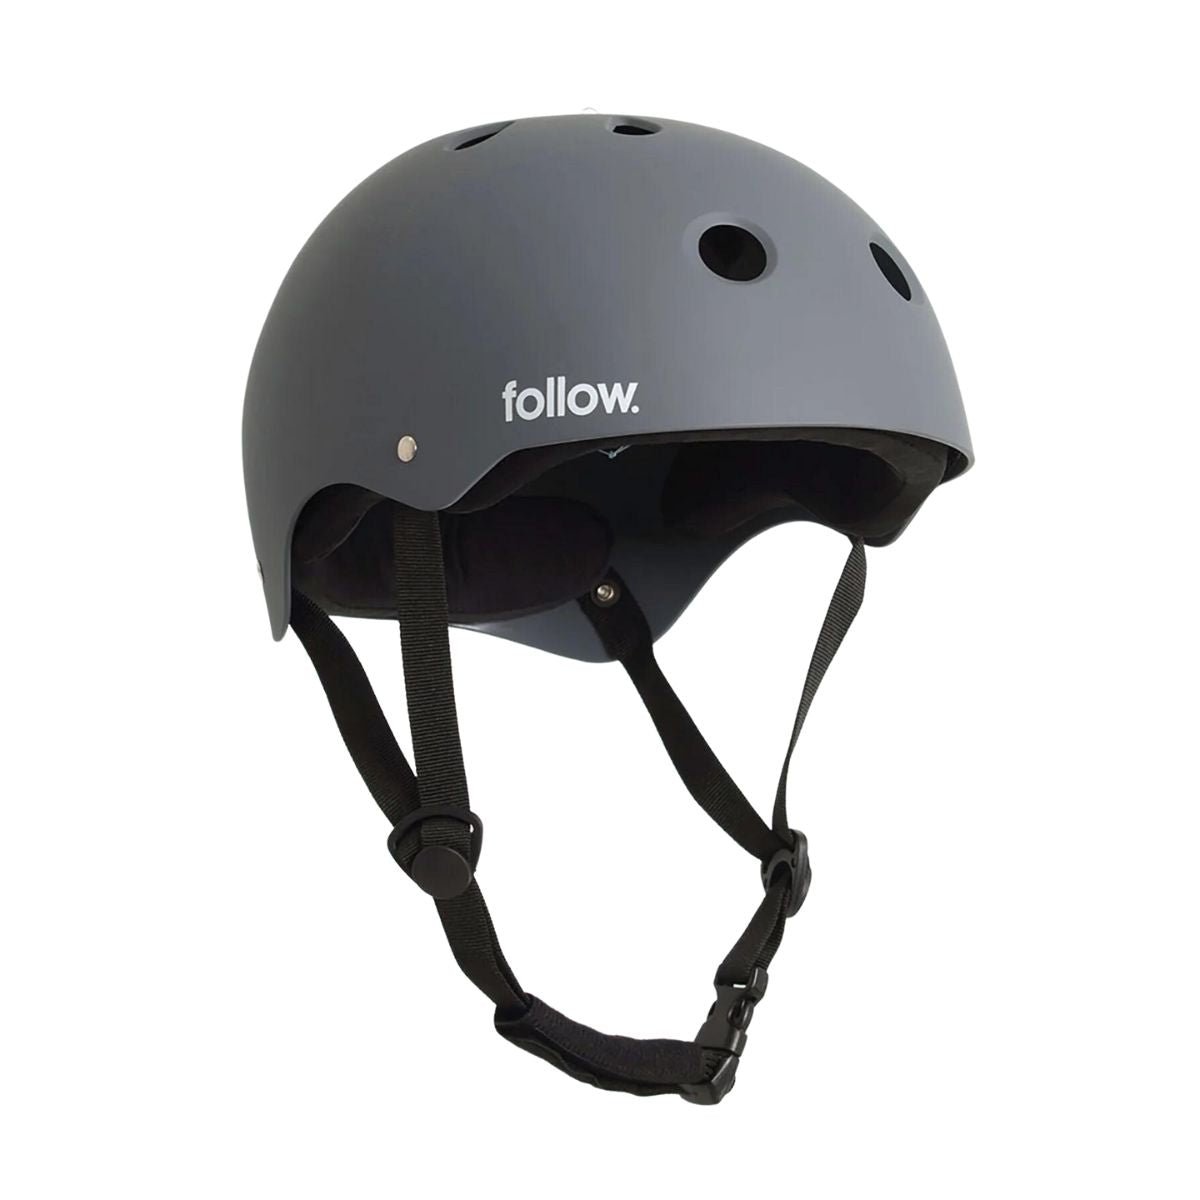 Follow Safety First Helmet in Stone - BoardCo